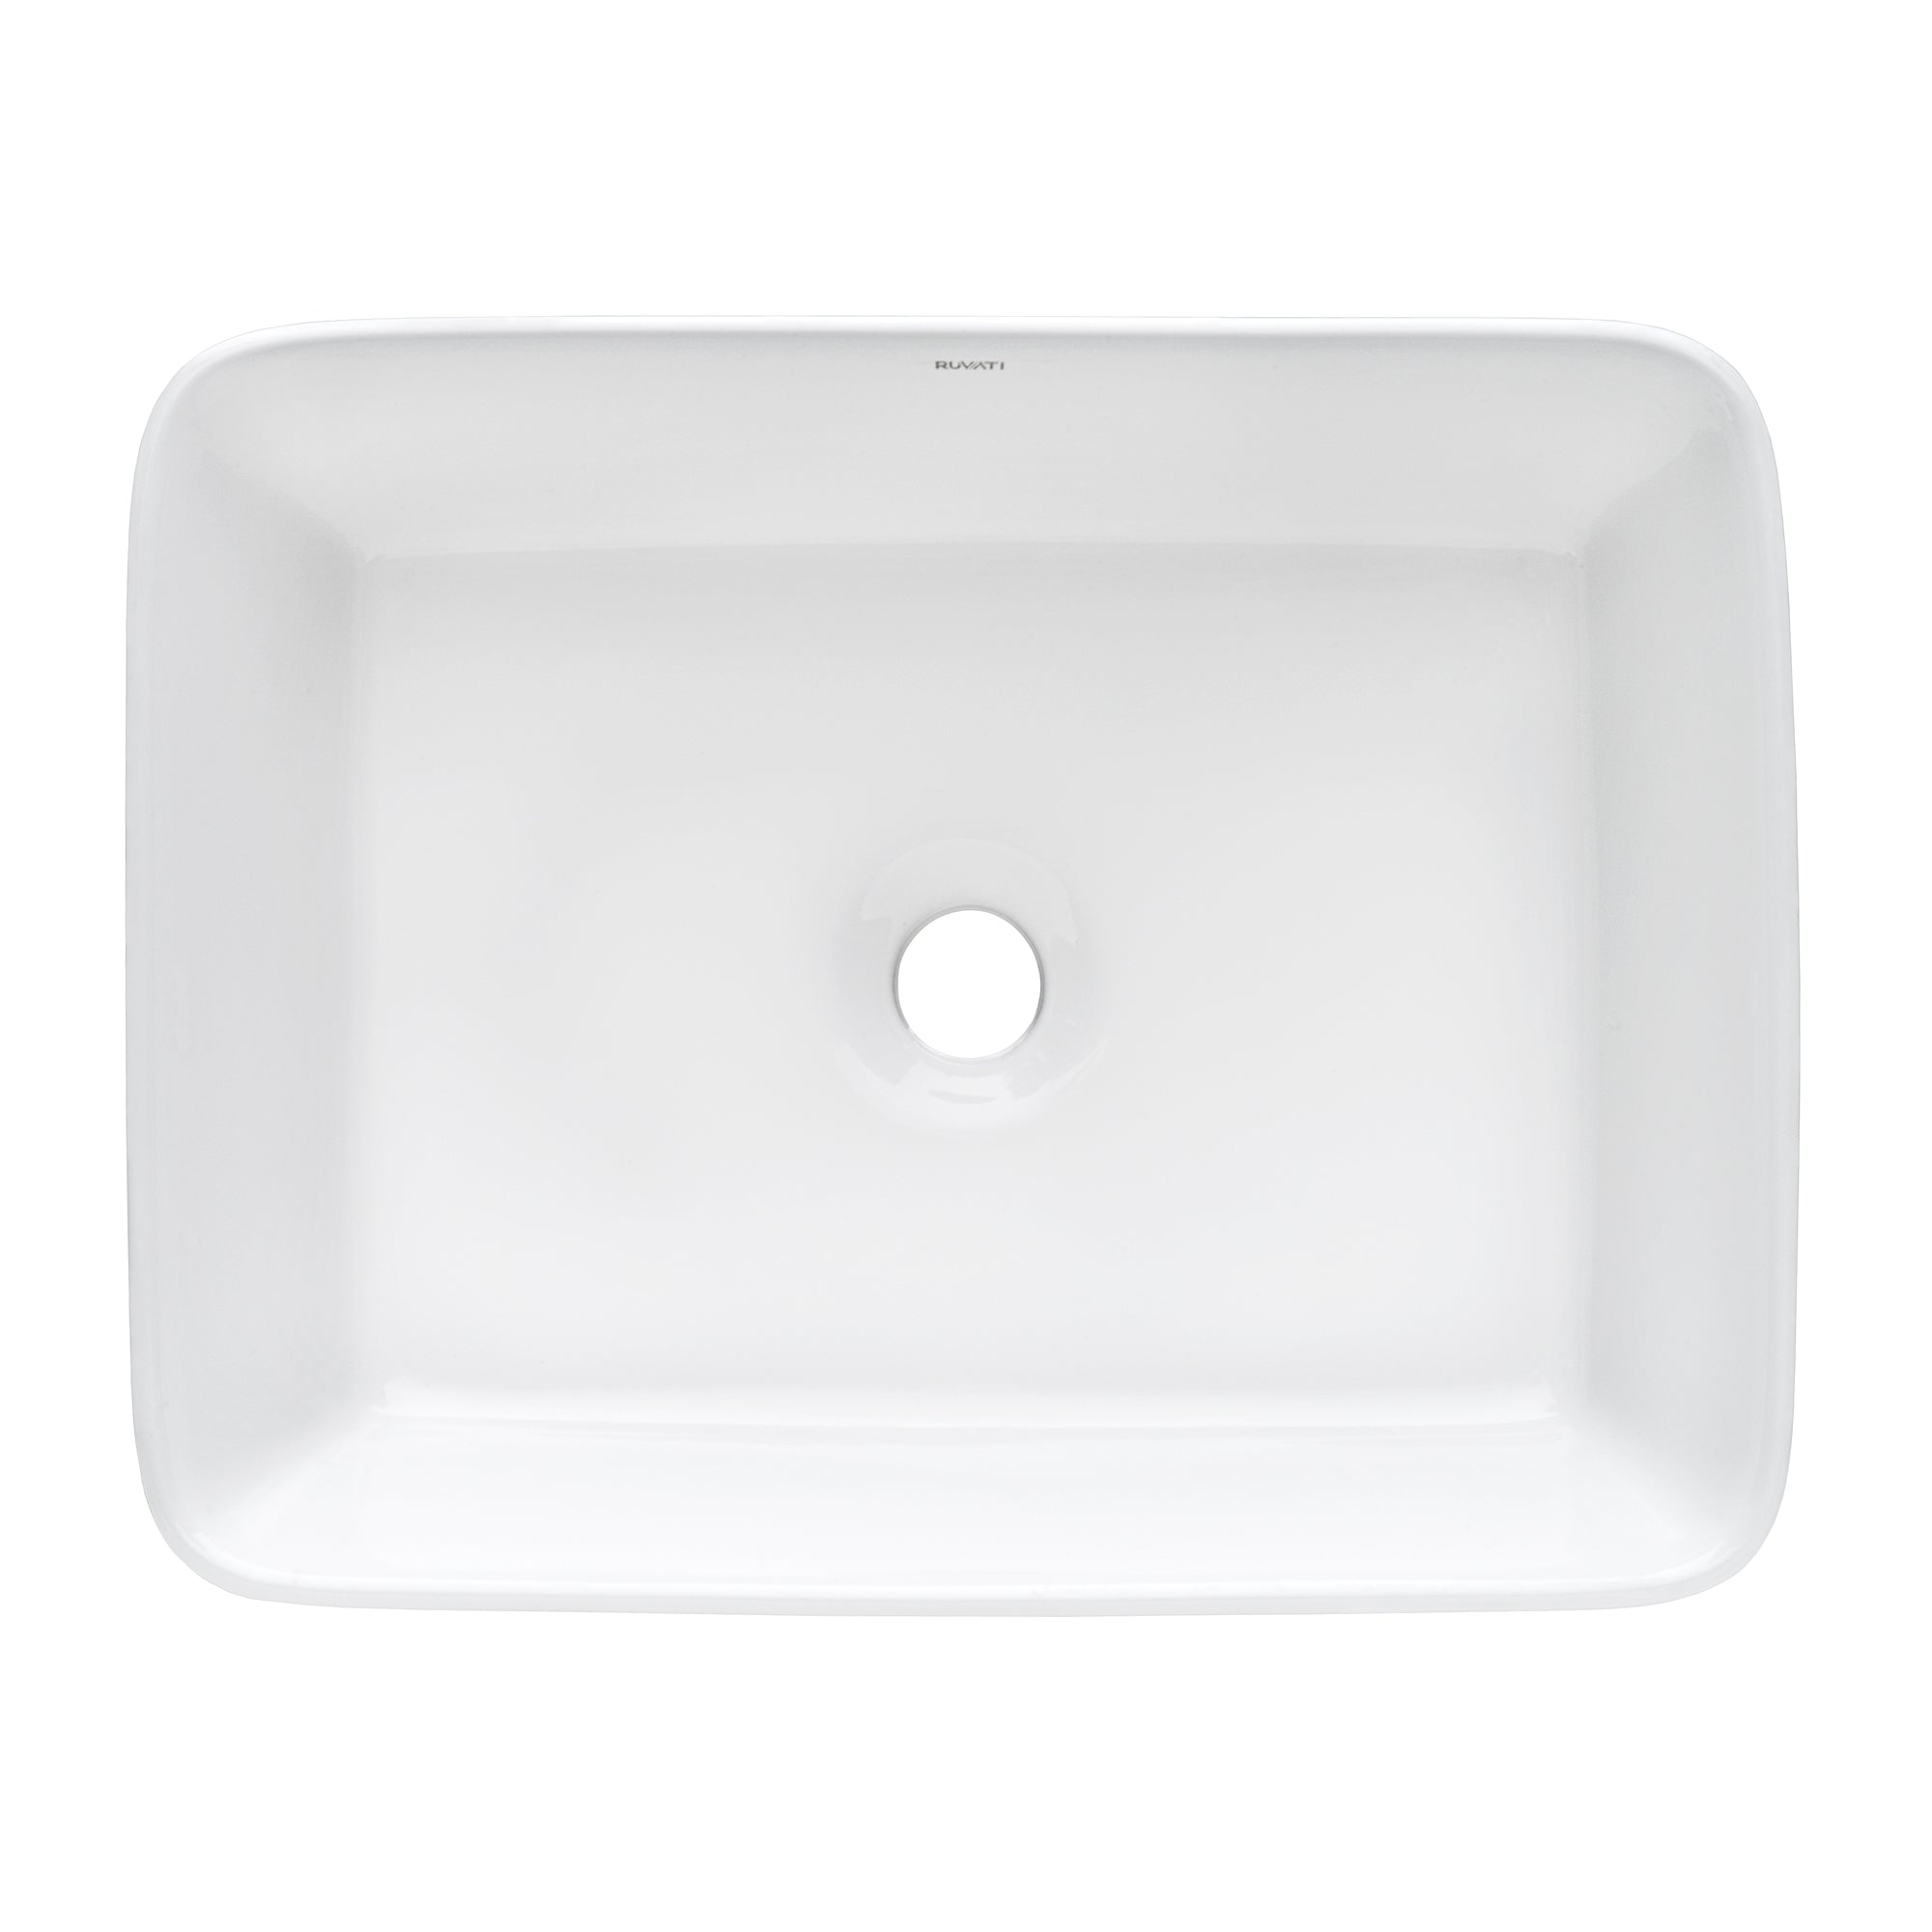 Ruvati 19" x 14" Rectangular Bathroom Vessel Sink in White